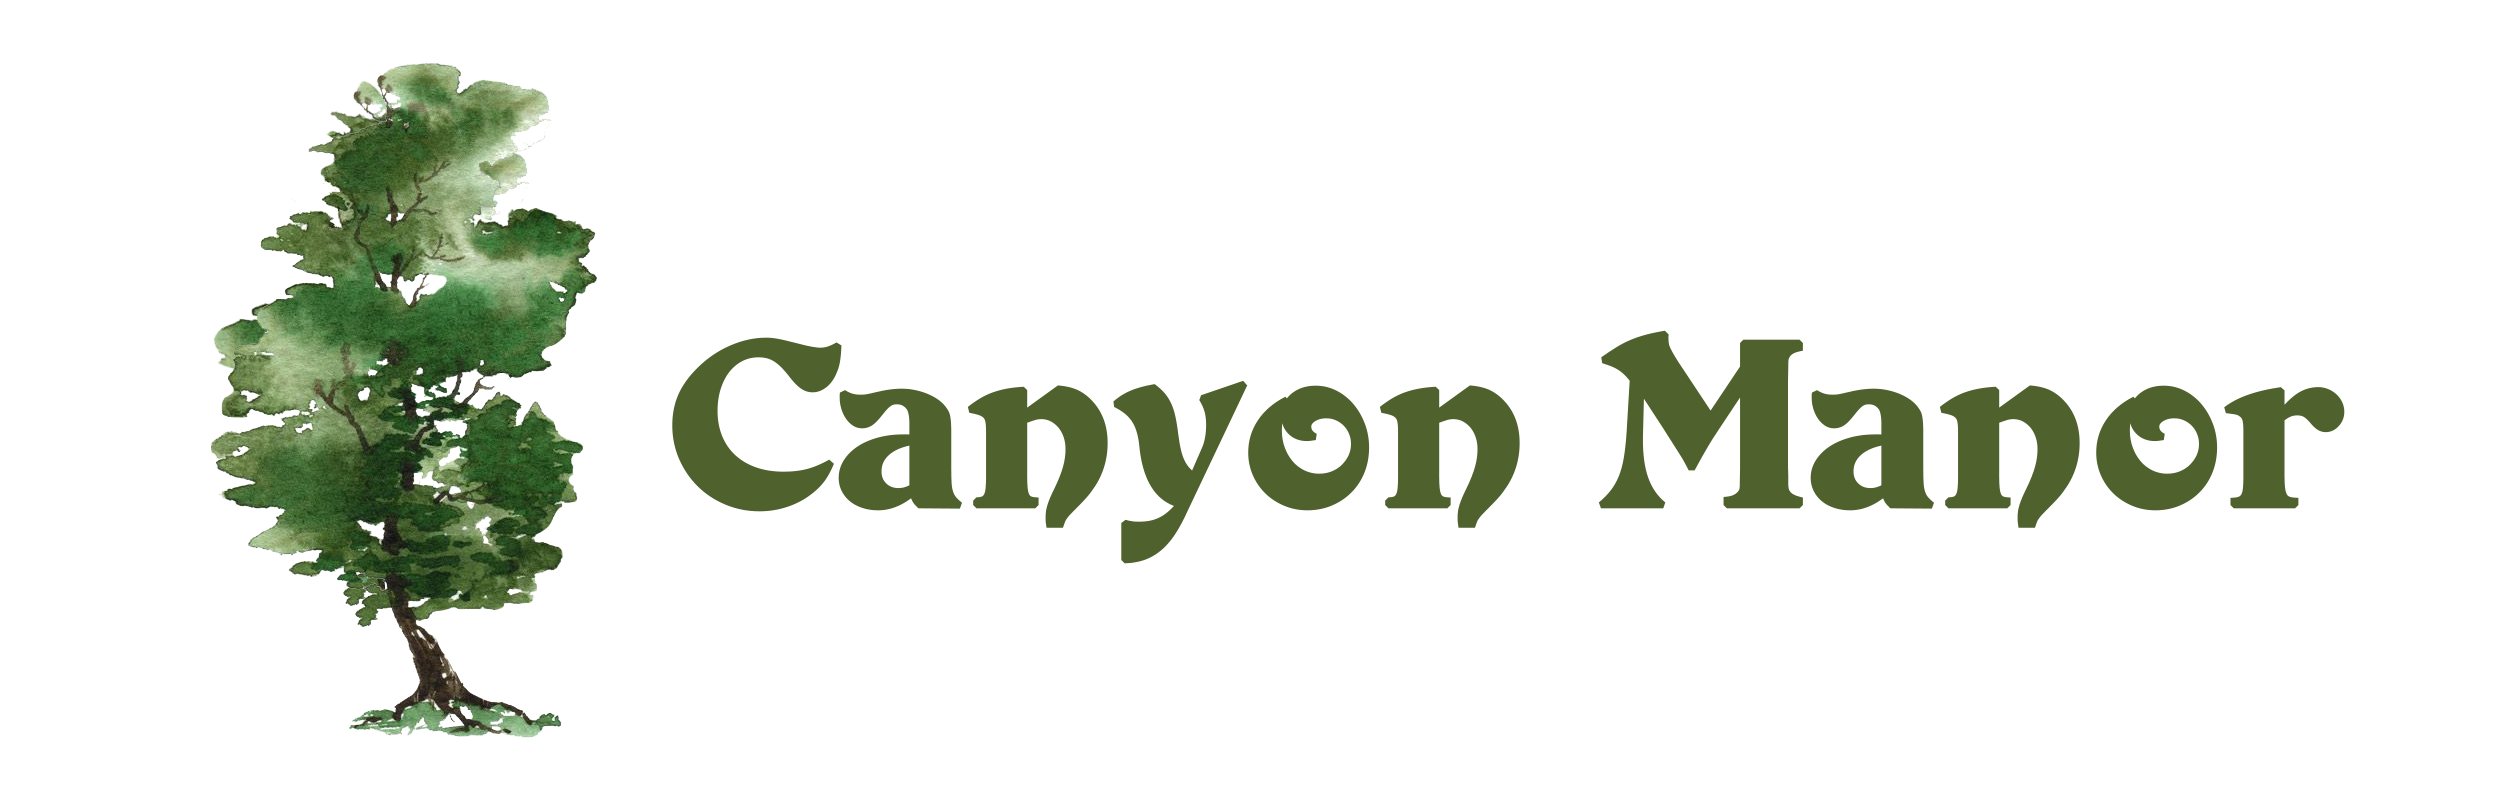 Canyon Manor Logo